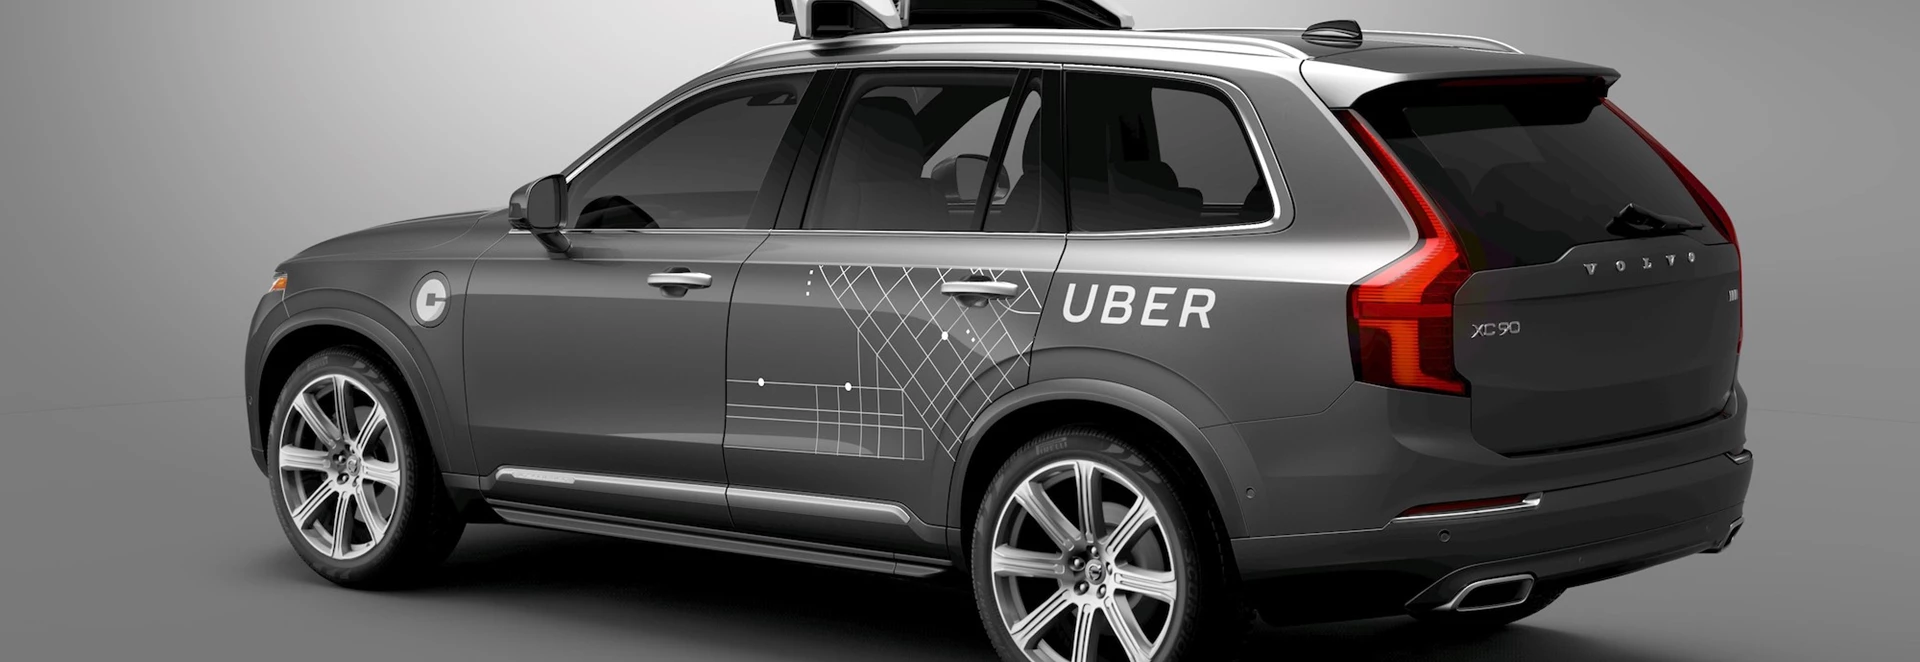 Volvo self driving cars uber 